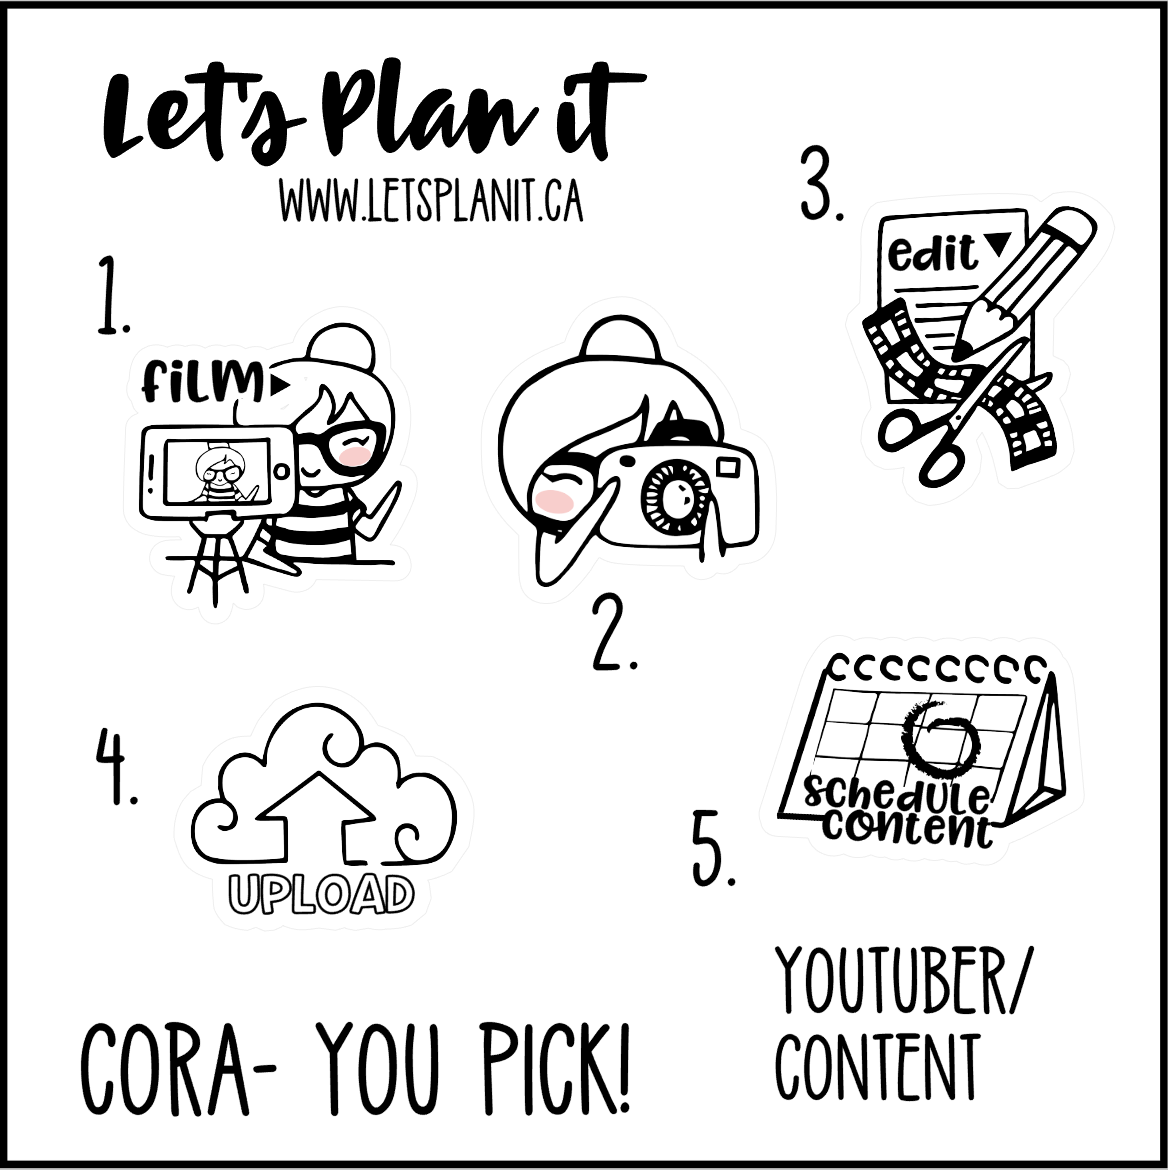 Cora-u-pick- Youtube/ Vlogger